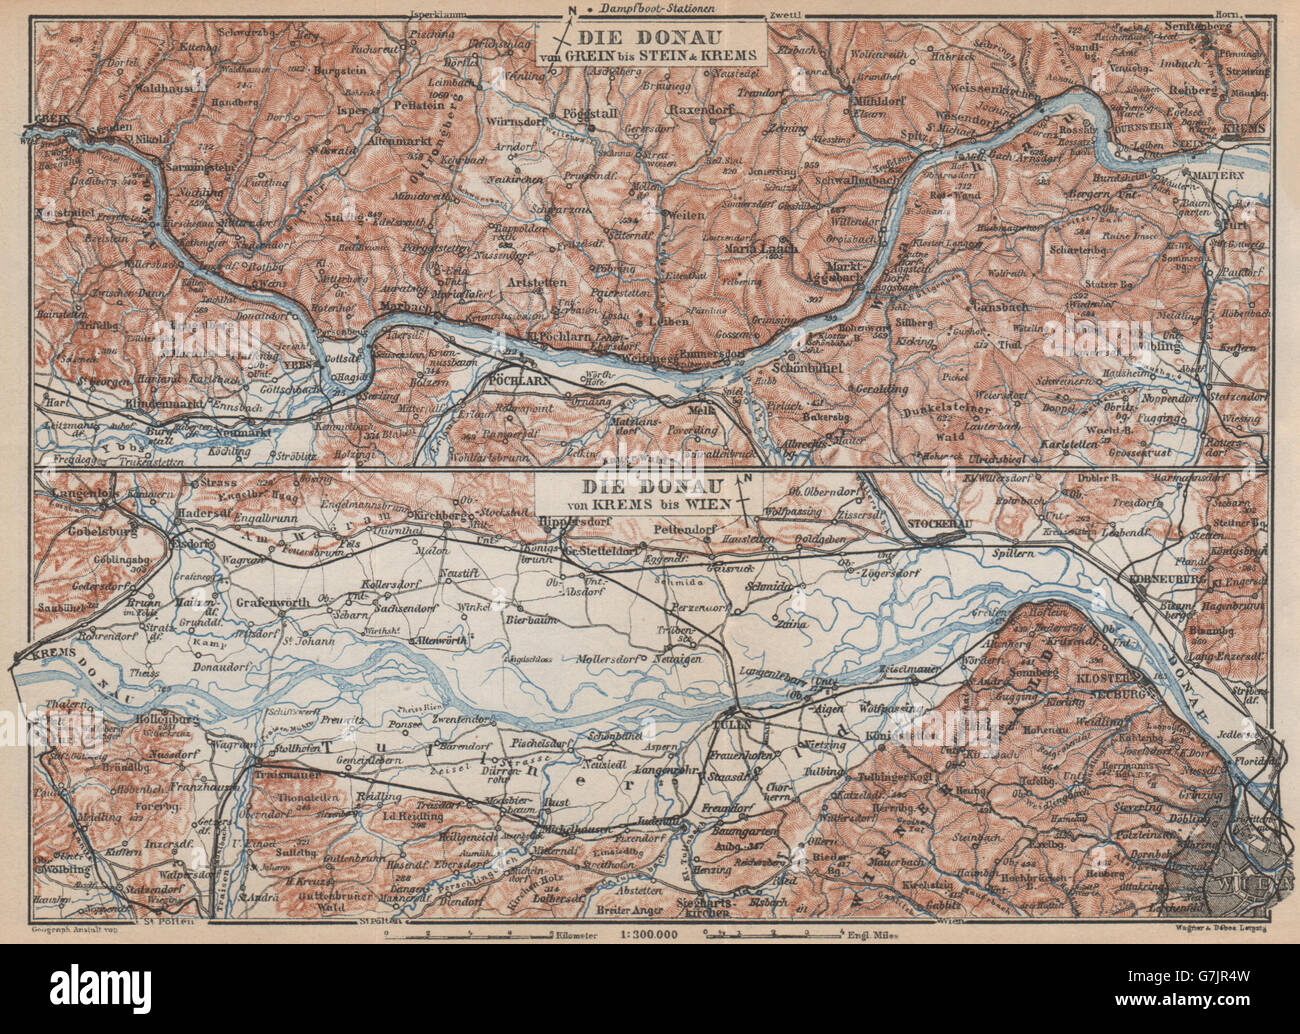 DANUBE DONAU RIVER. Grein-Ybbs-Pochlarn-Melk-Spitz-Krems. Austria, 1929 map Stock Photo